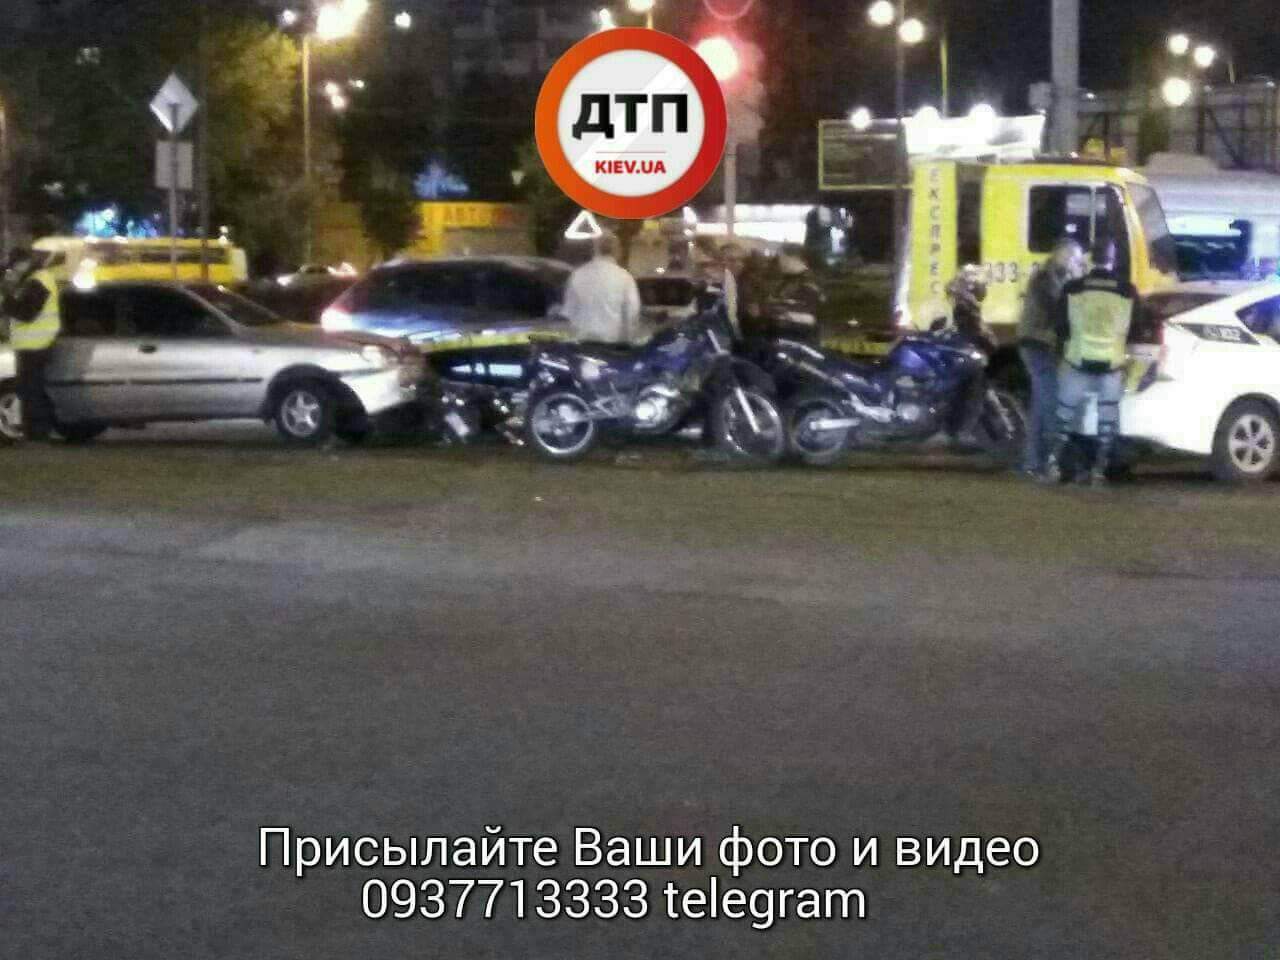 В Киеве произошло столкновение мотоцикла и легковушки (фото)